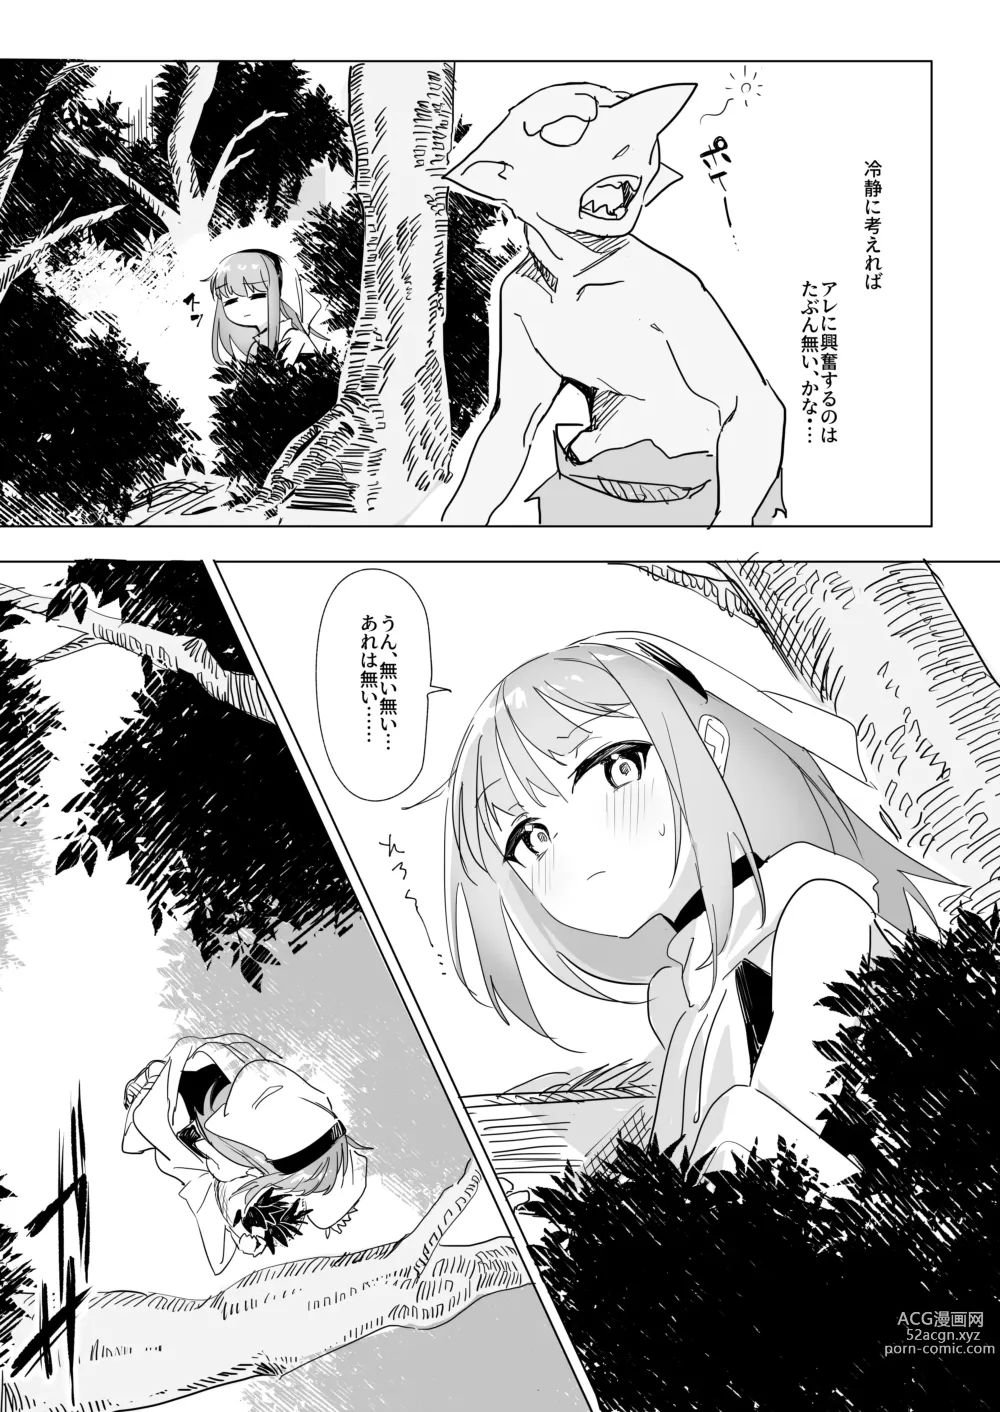 Page 13 of doujinshi Sister x Goblin